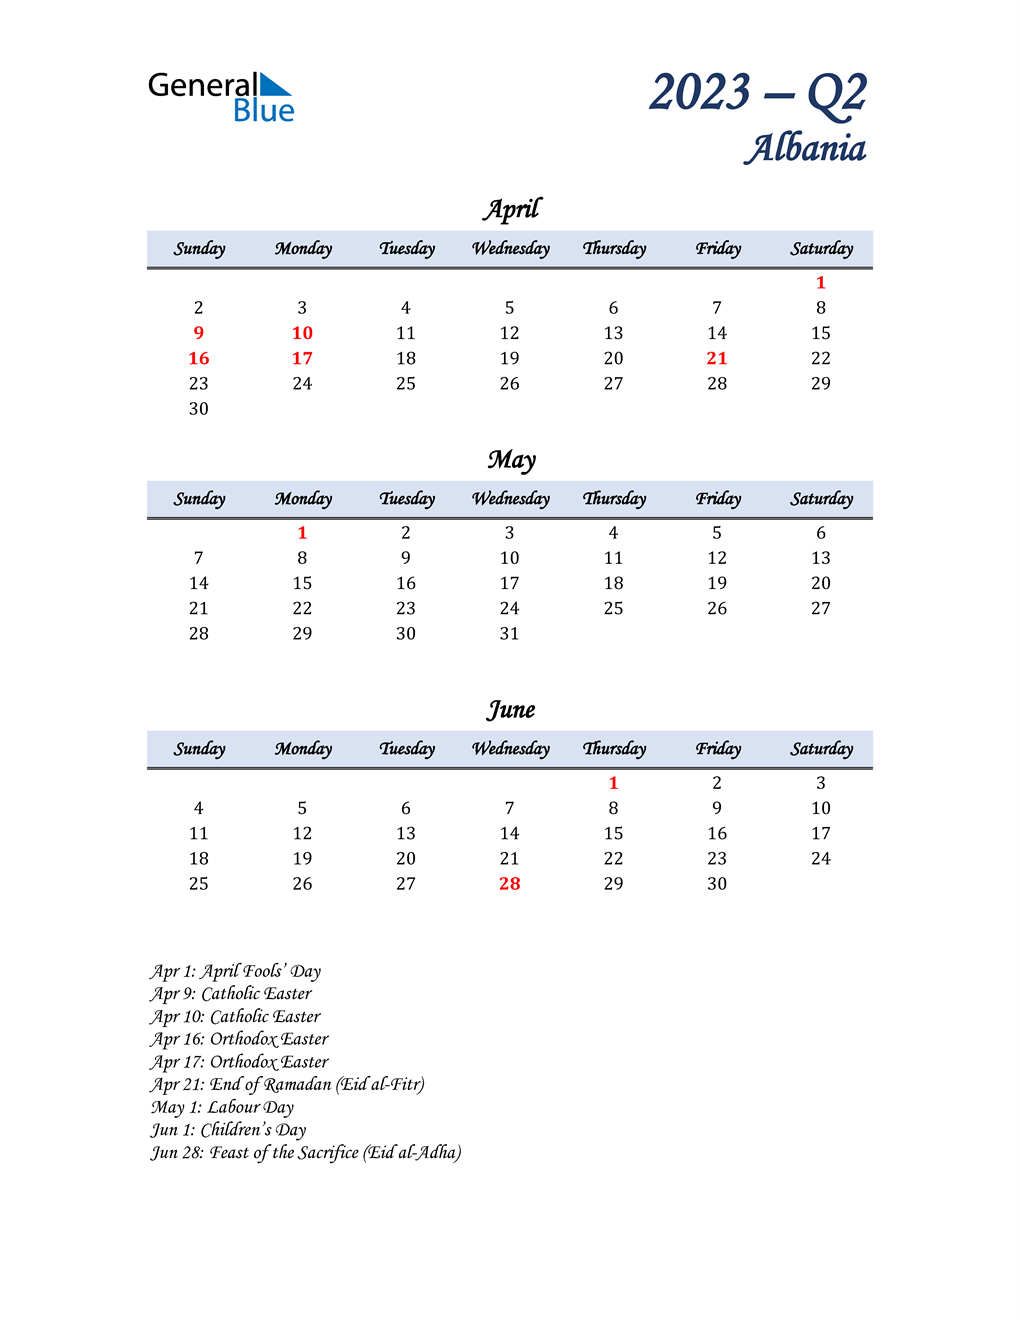  April, May, and June Calendar for Albania